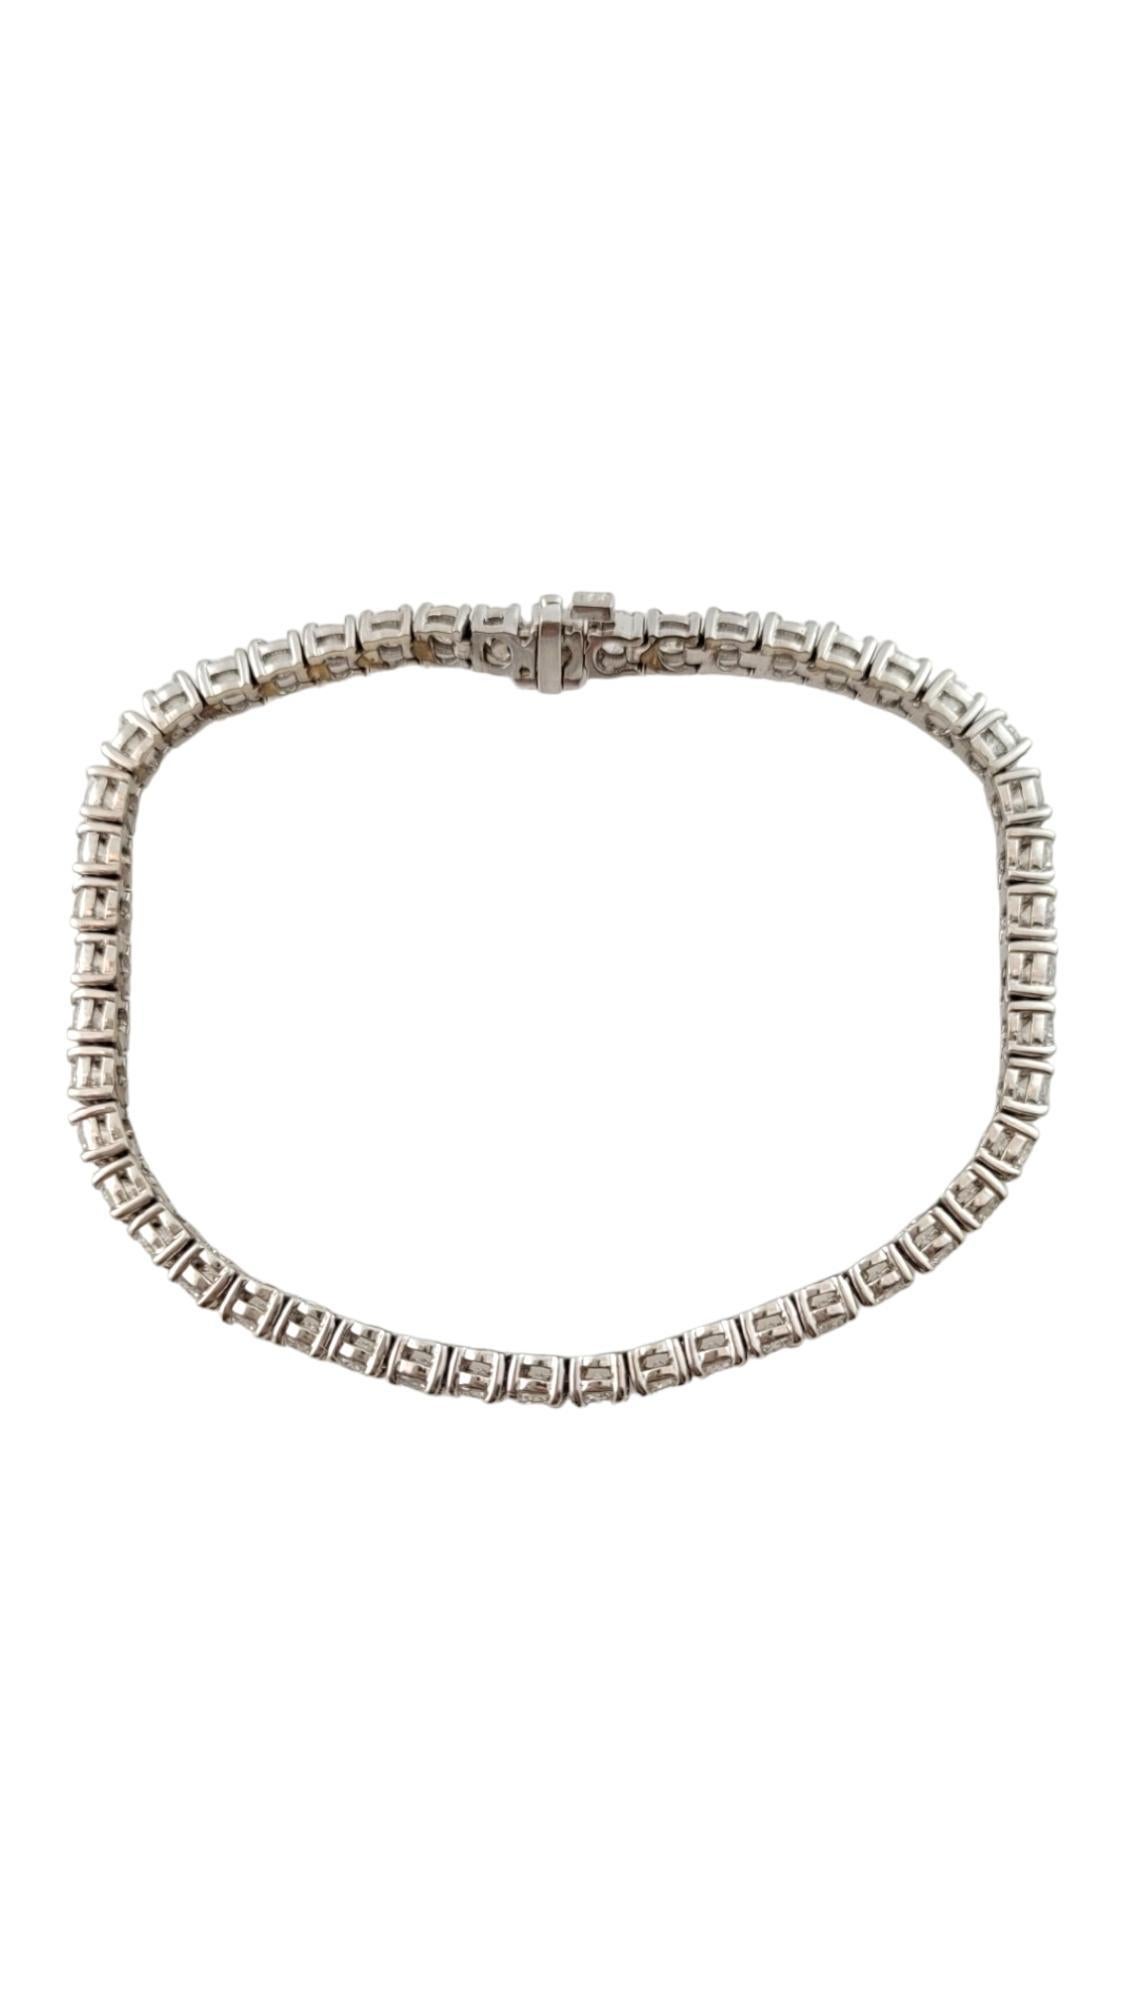 Brilliant Cut 14K White Gold Diamond Tennis Bracelet #16457